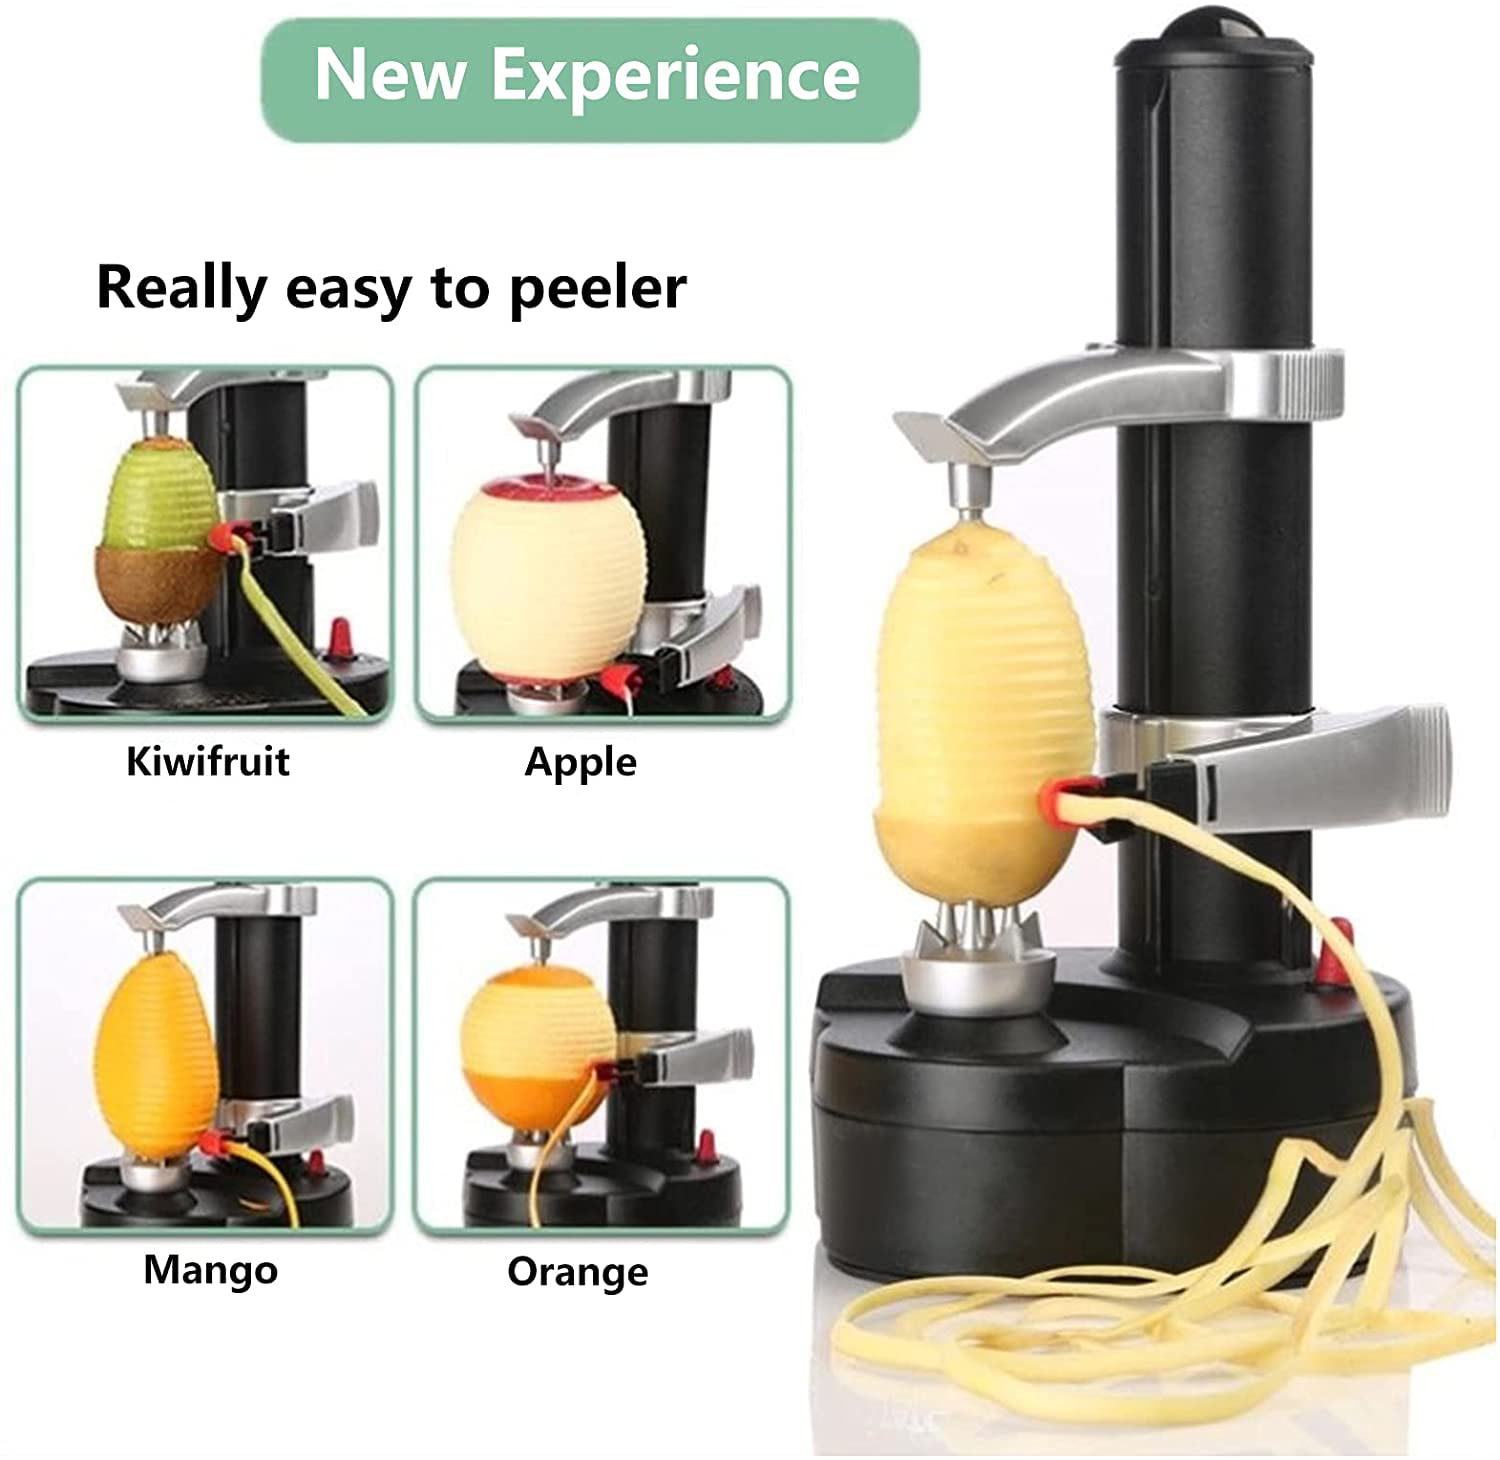 A TikTok-Famous Electric Potato Peeler Is on Sale at